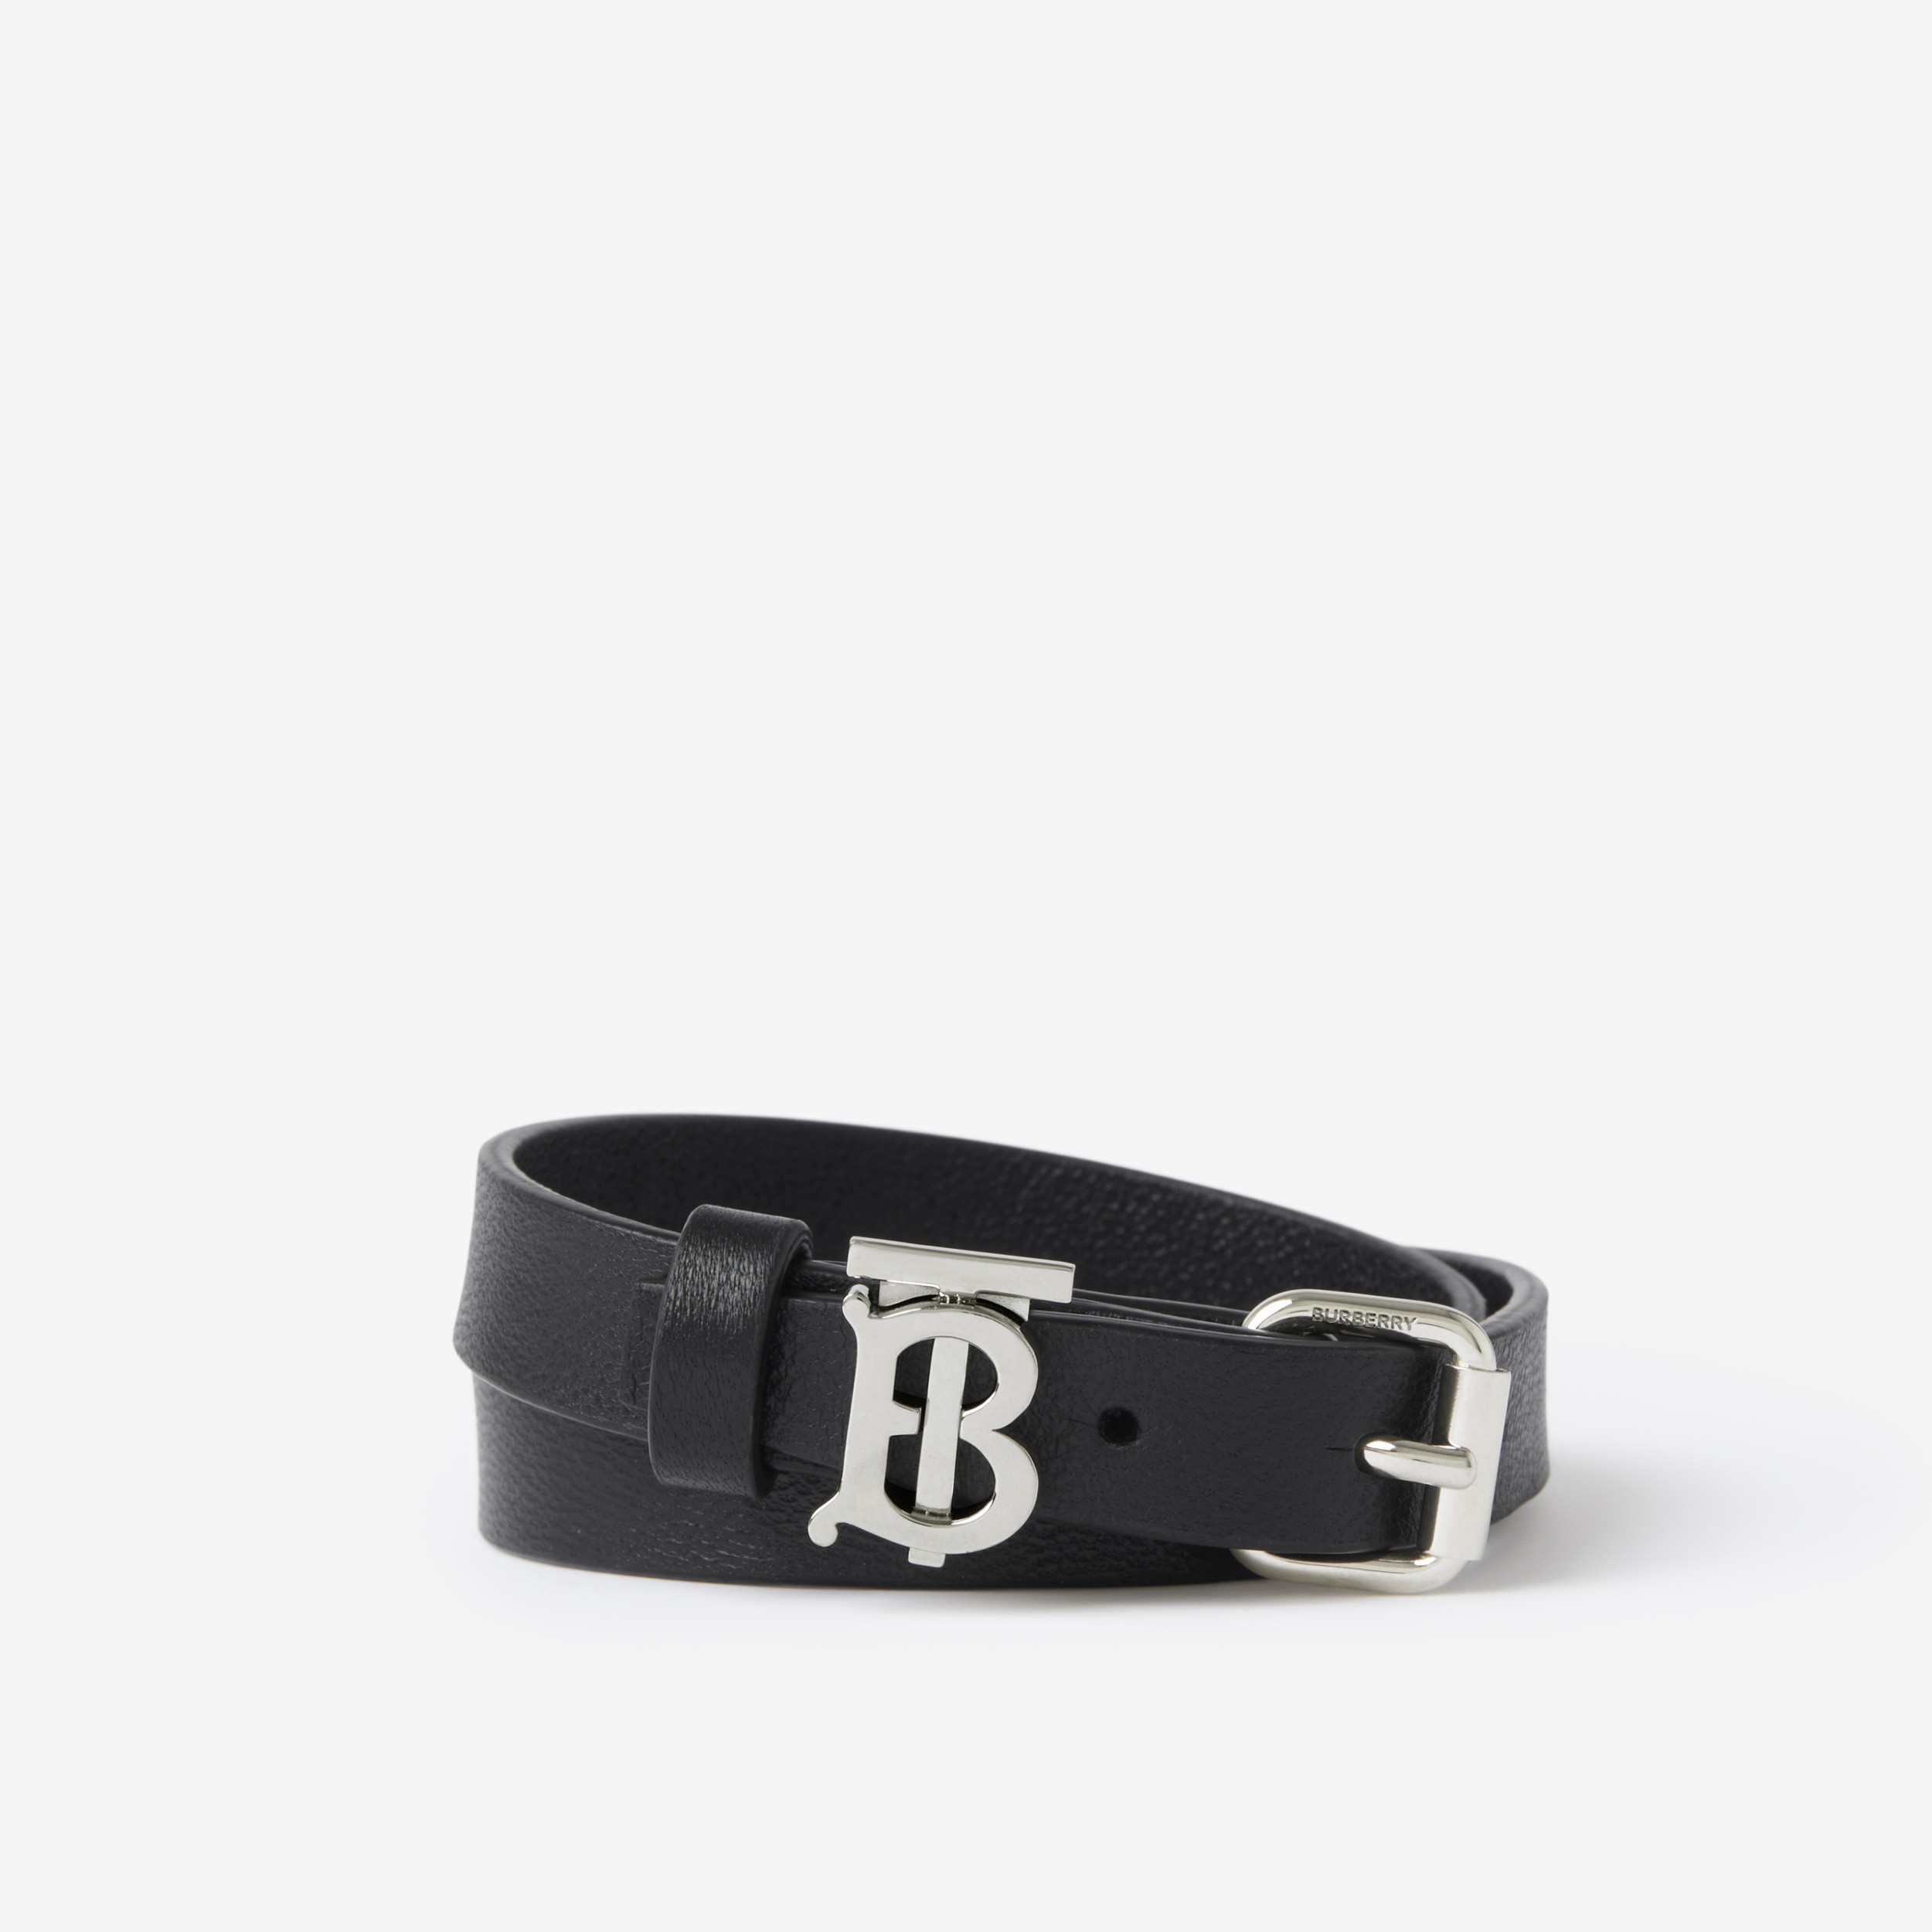 Actualizar 62+ imagen burberry men’s leather bracelet